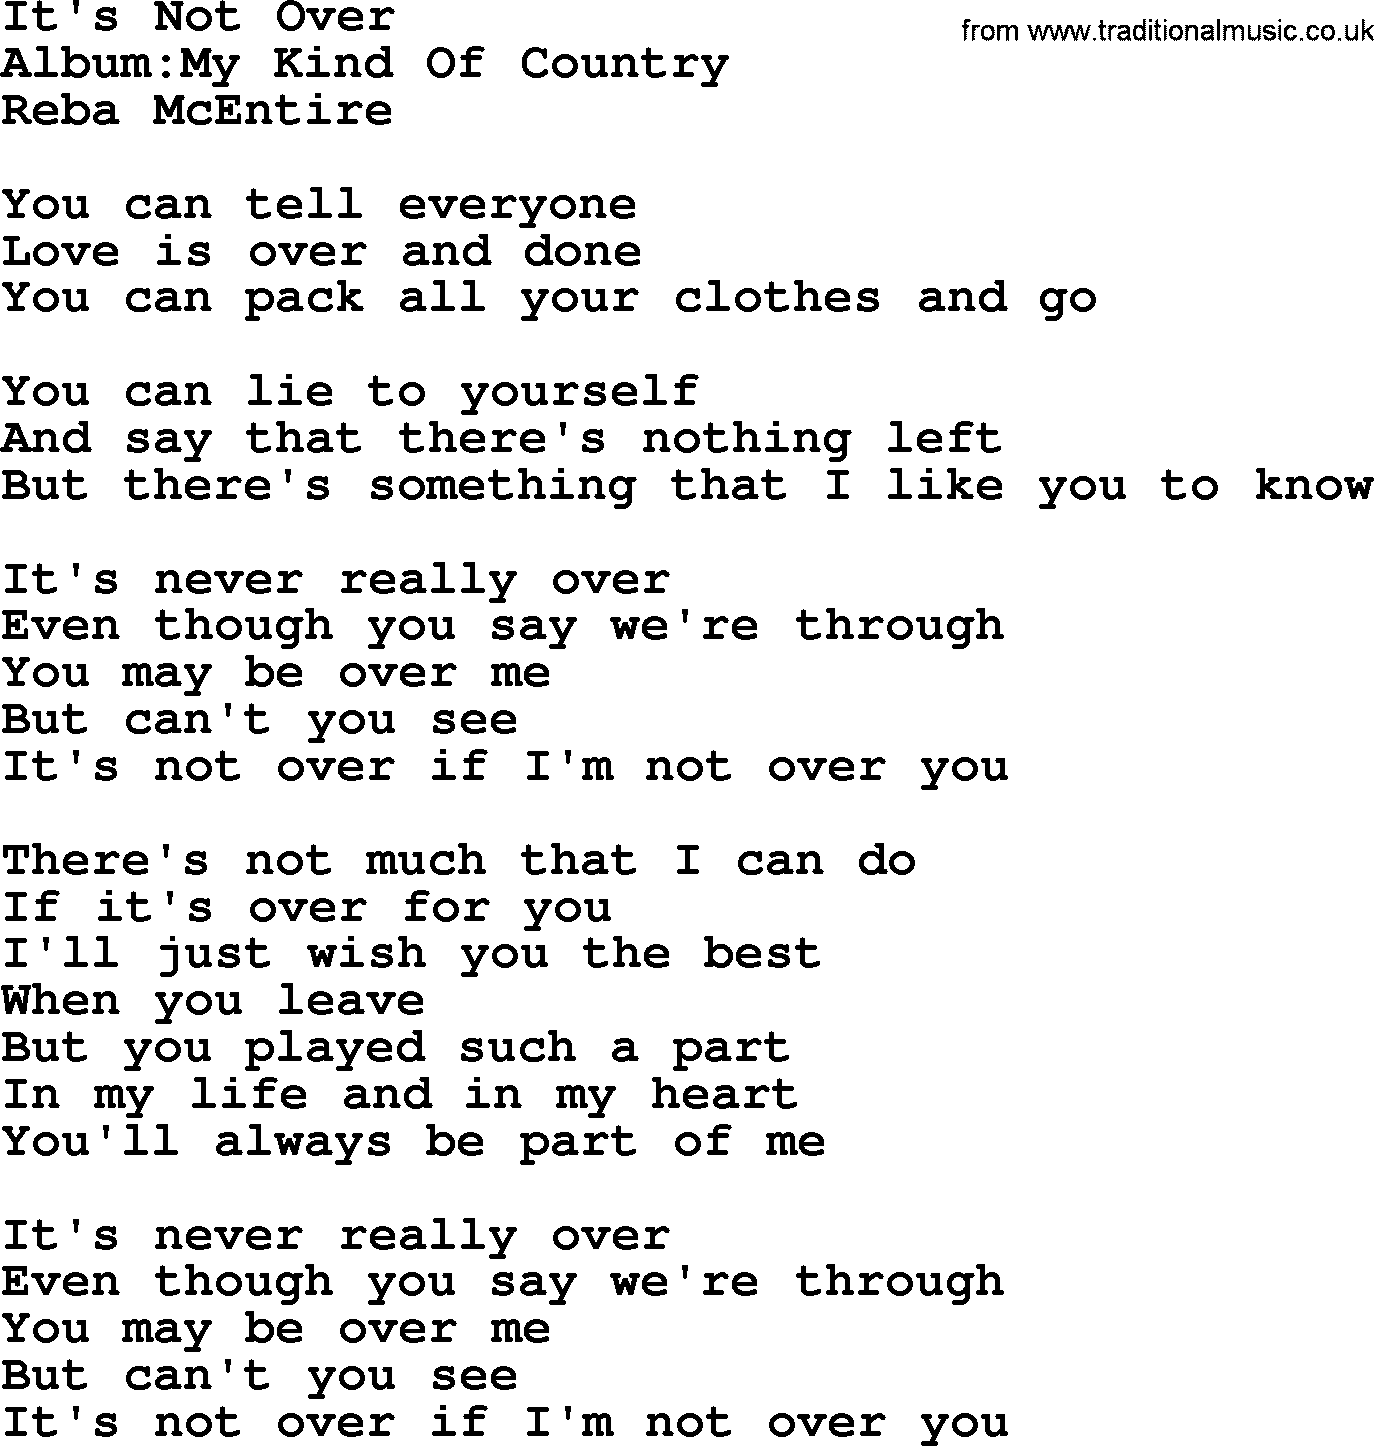 Reba McEntire song: It's Not Over lyrics